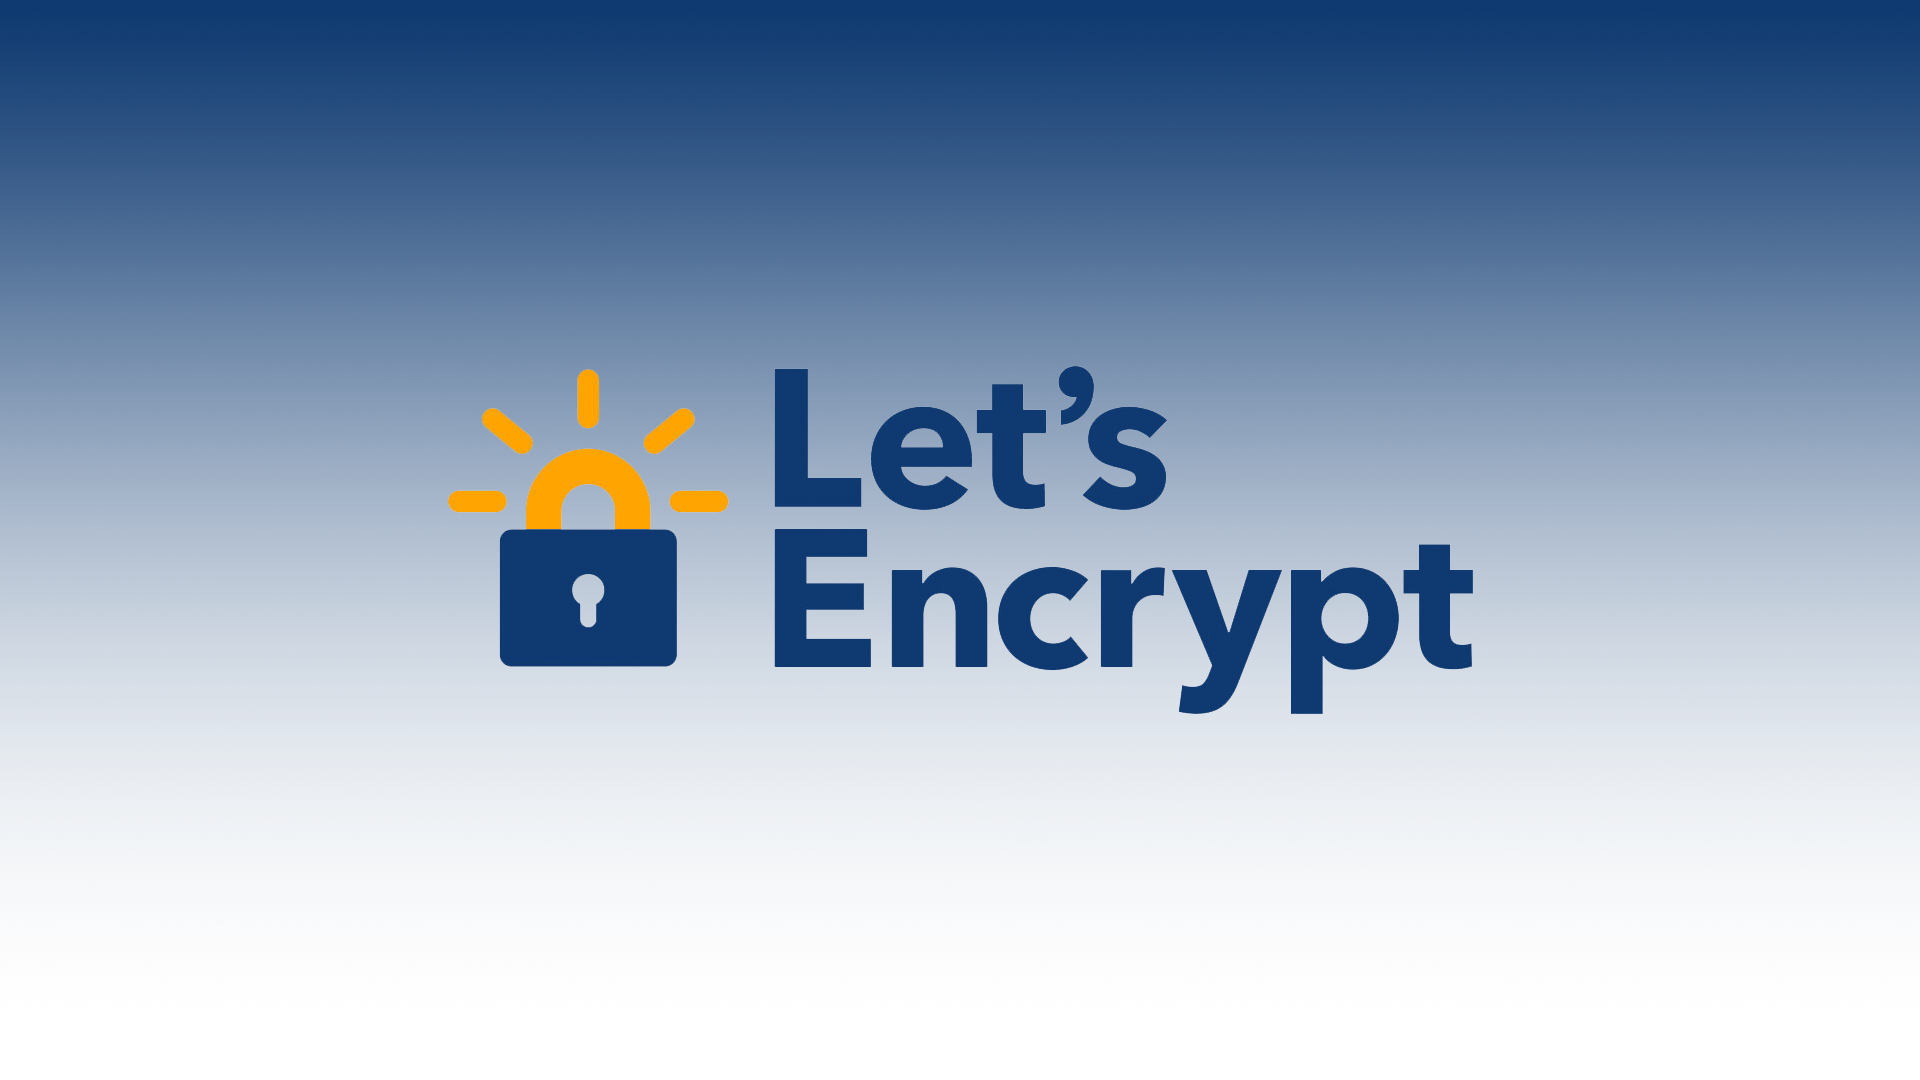 Secure your website using Let’s Encrypt with Certbot SSL